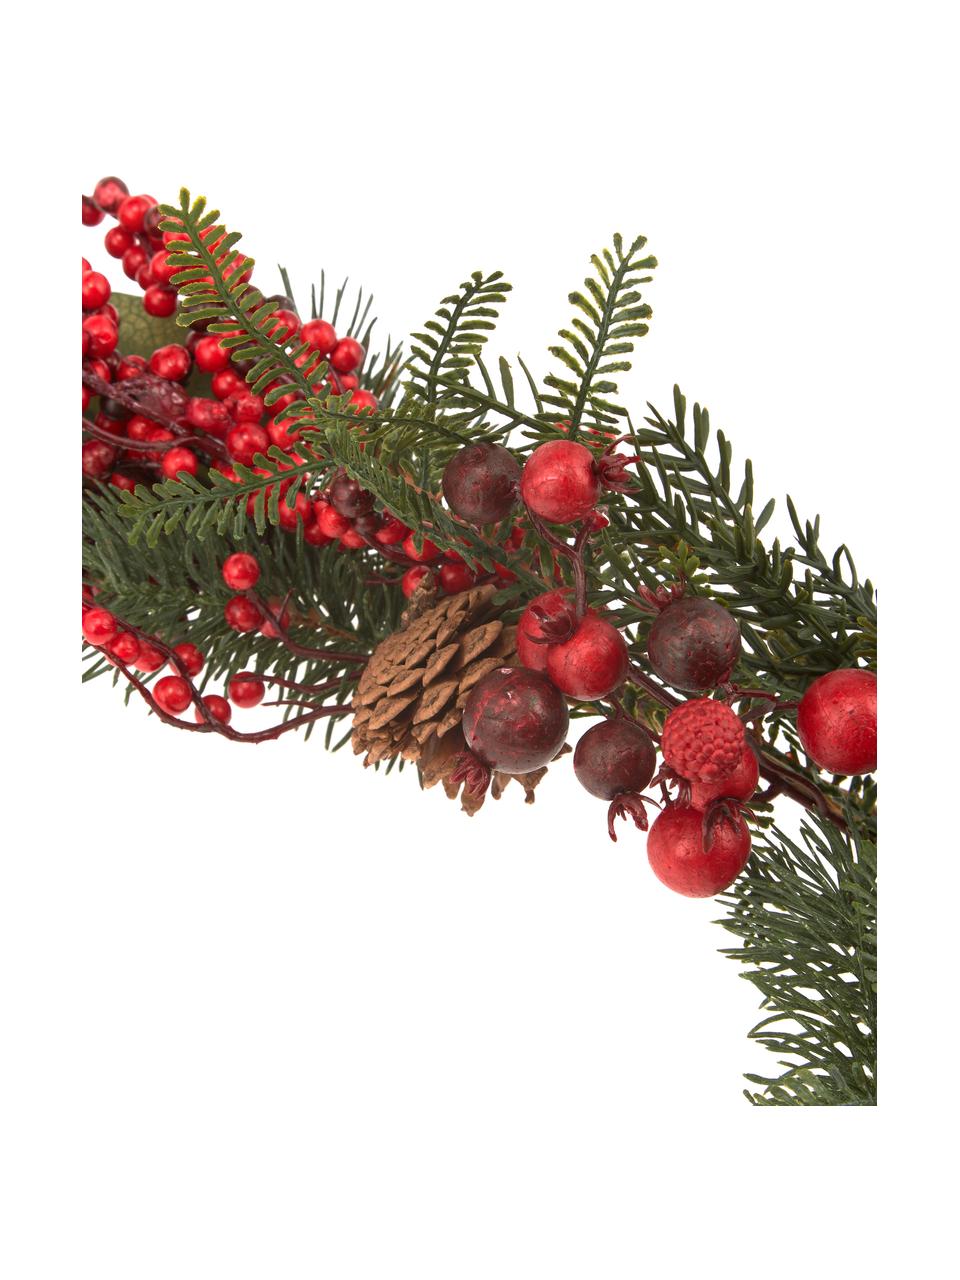 Ghirlanda natalizia di abete Marien, lung. 176 cm, Plastica, Rosso, verde scuro, Ø 15 x Lung. 176 cm